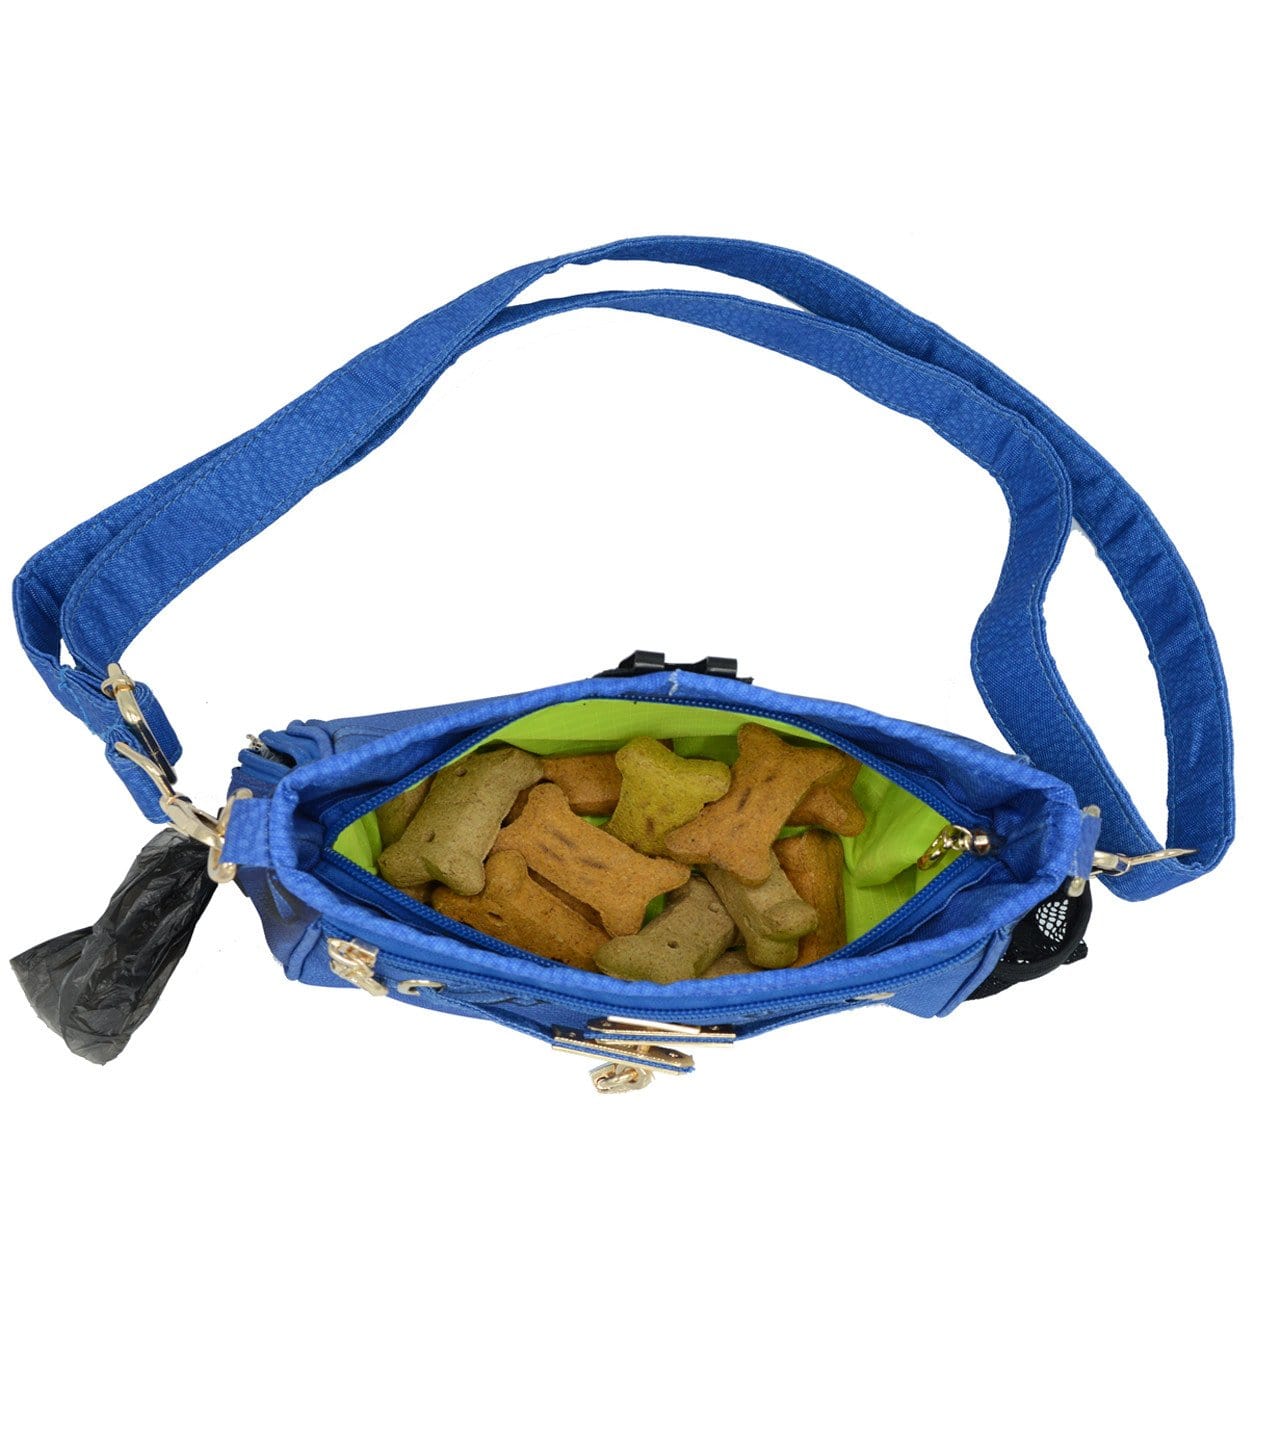 Treat Training Bag: dog treats inside